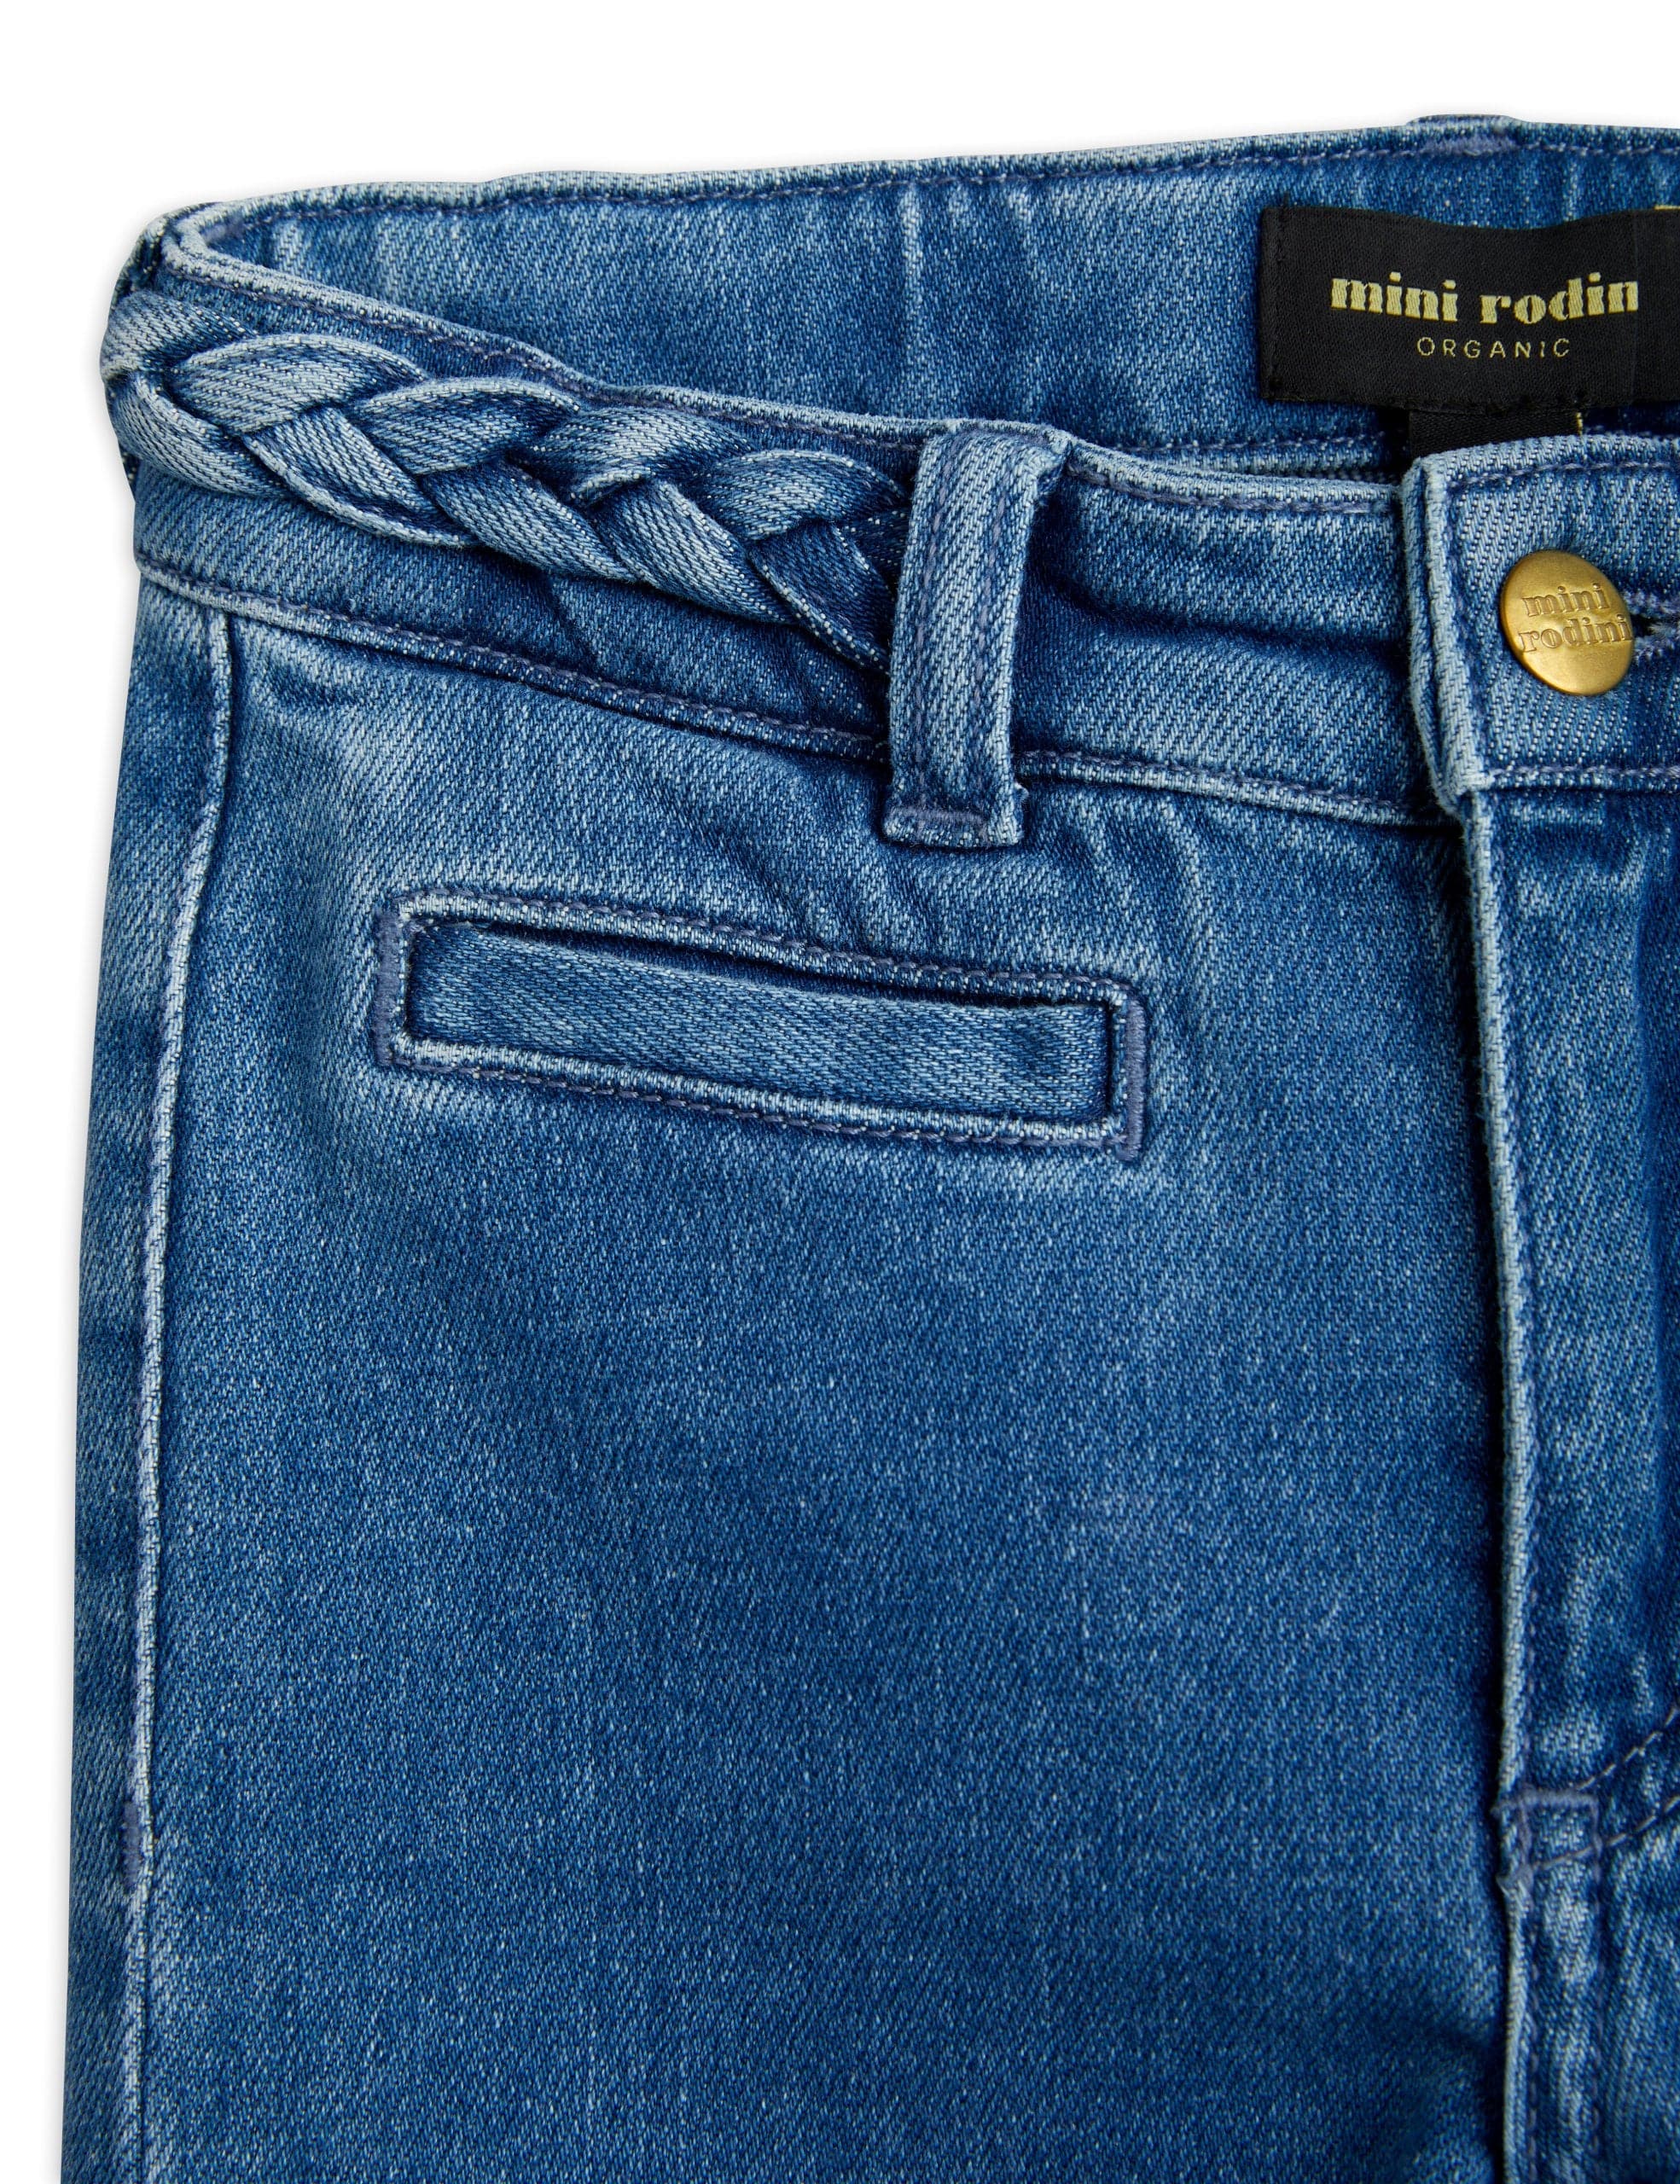 Mini Rodini | Frisco flared denim jeans